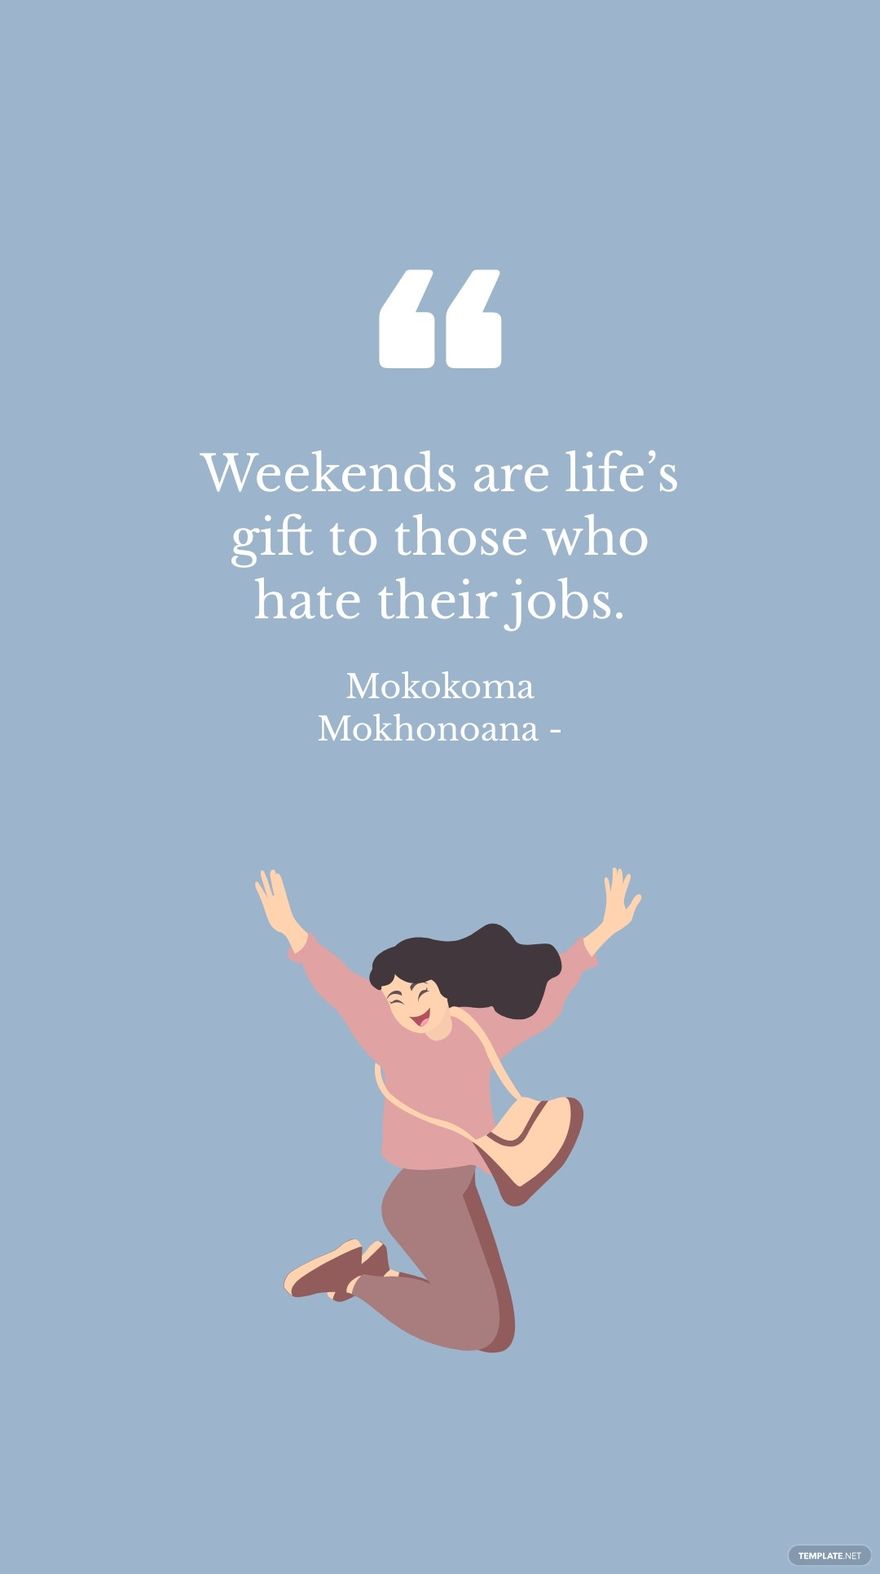 Mokokoma Mokhonoana - Weekends are life’s gift to those who hate their jobs.